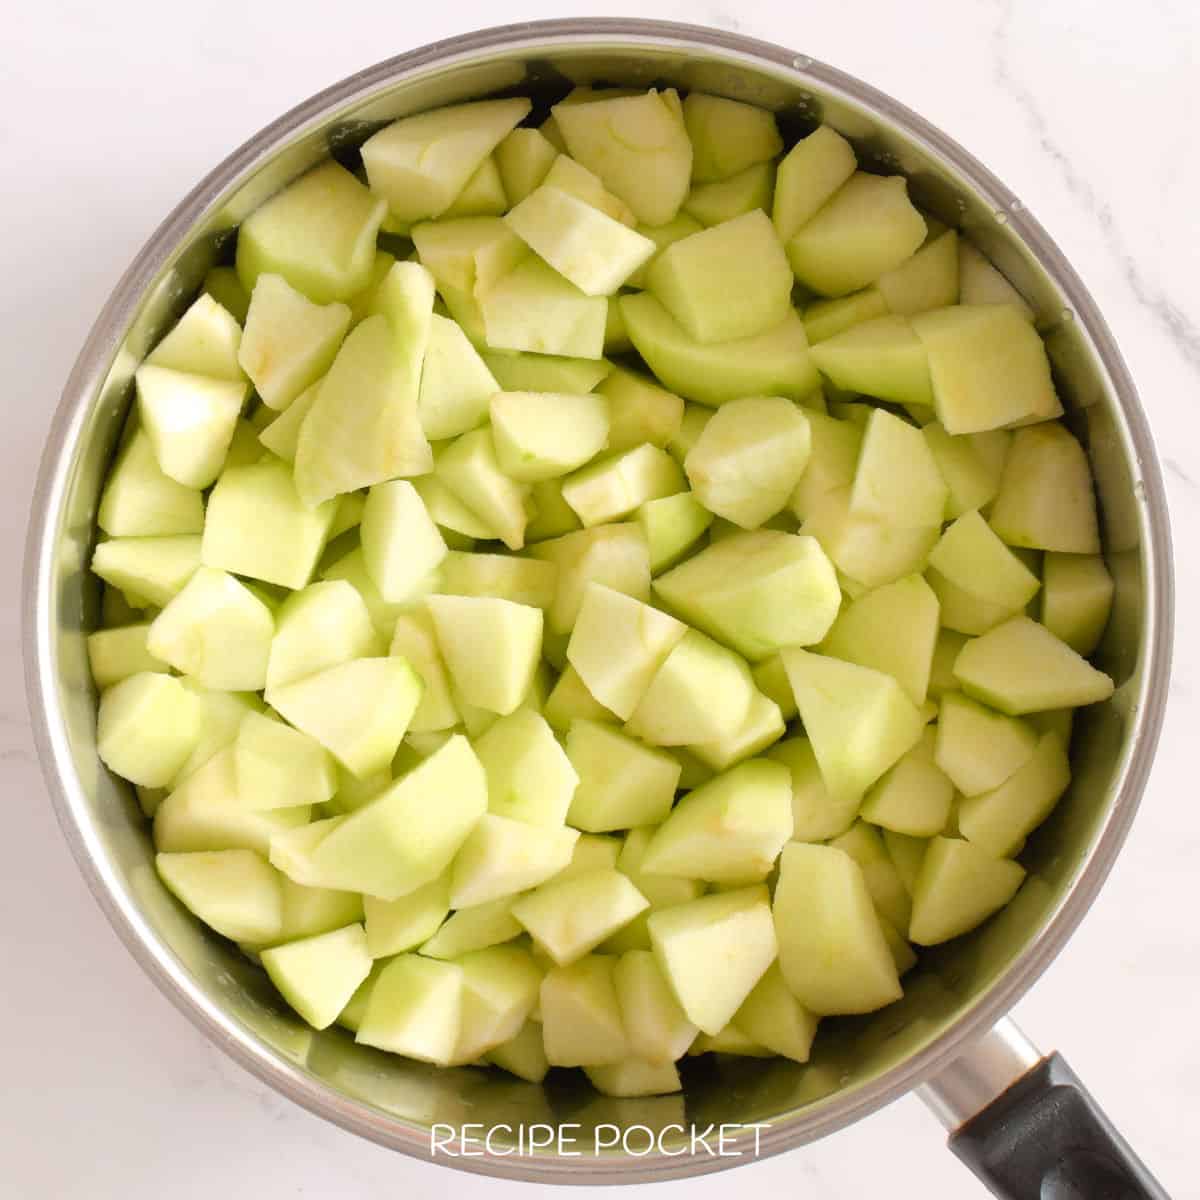 Diced apple pieces in a saucepan.